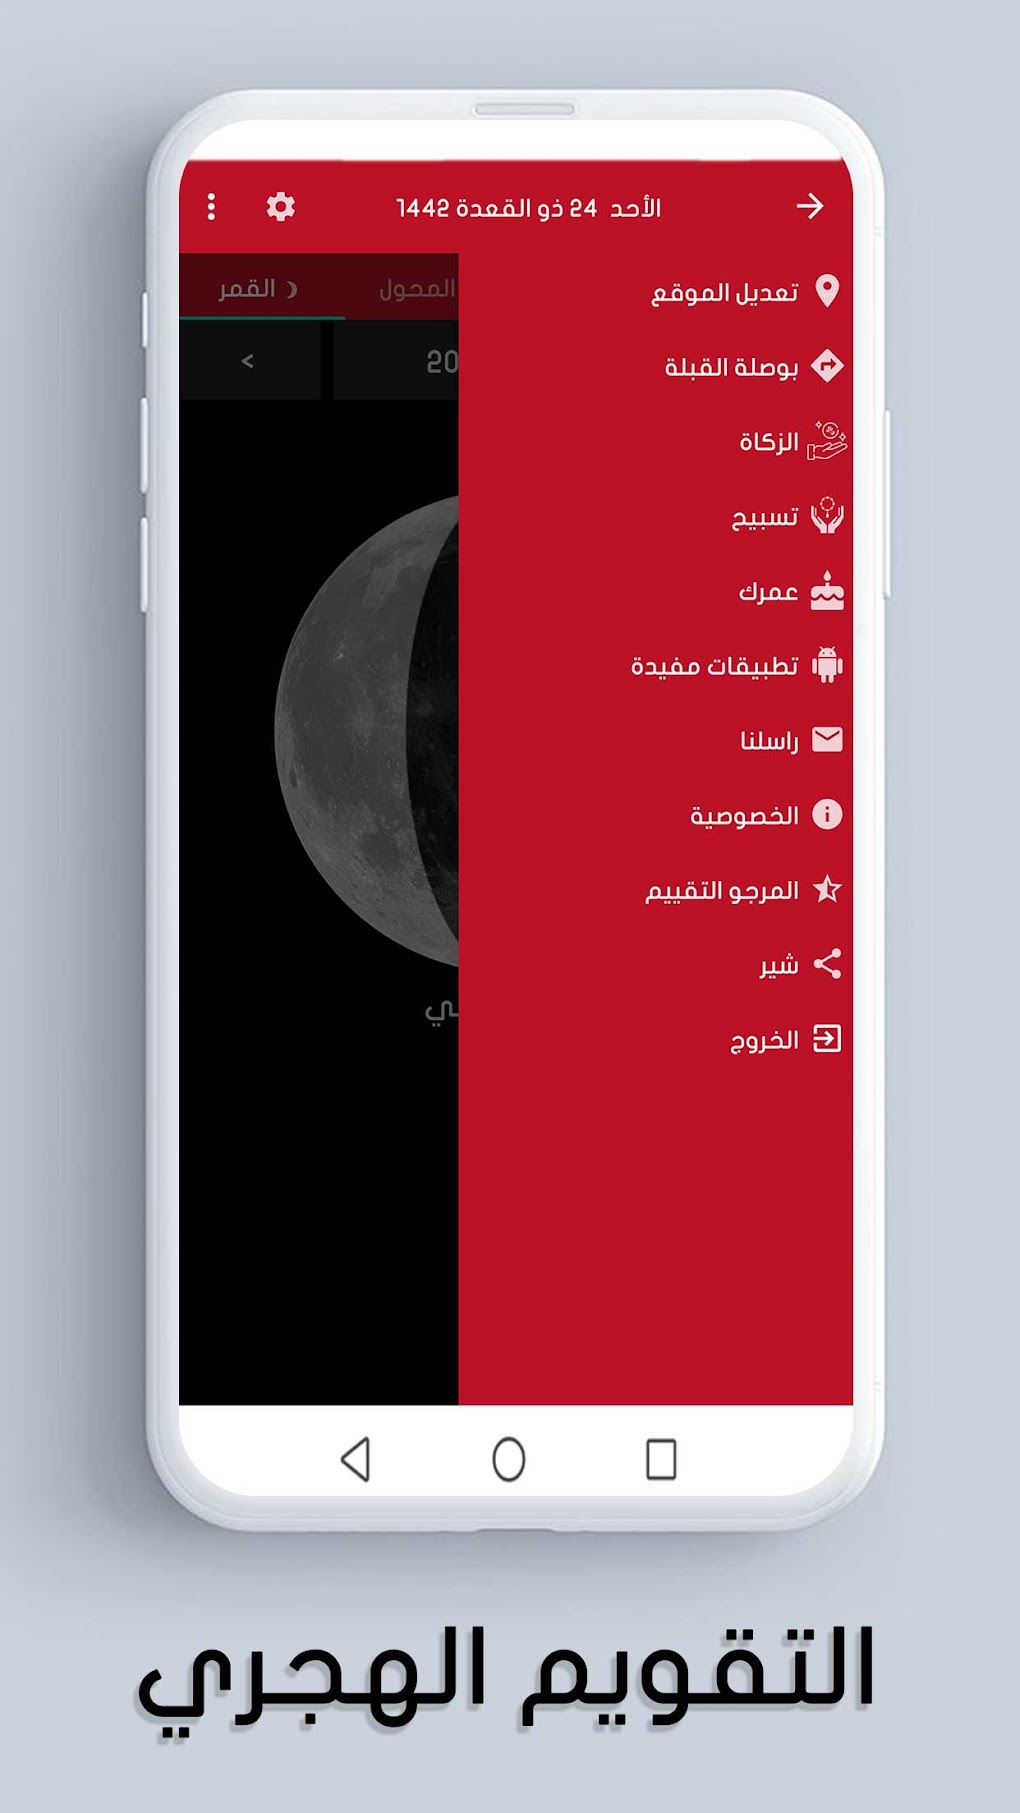 hijri-and-gregorian-calendar-islamic-calendar-apk-for-android-download